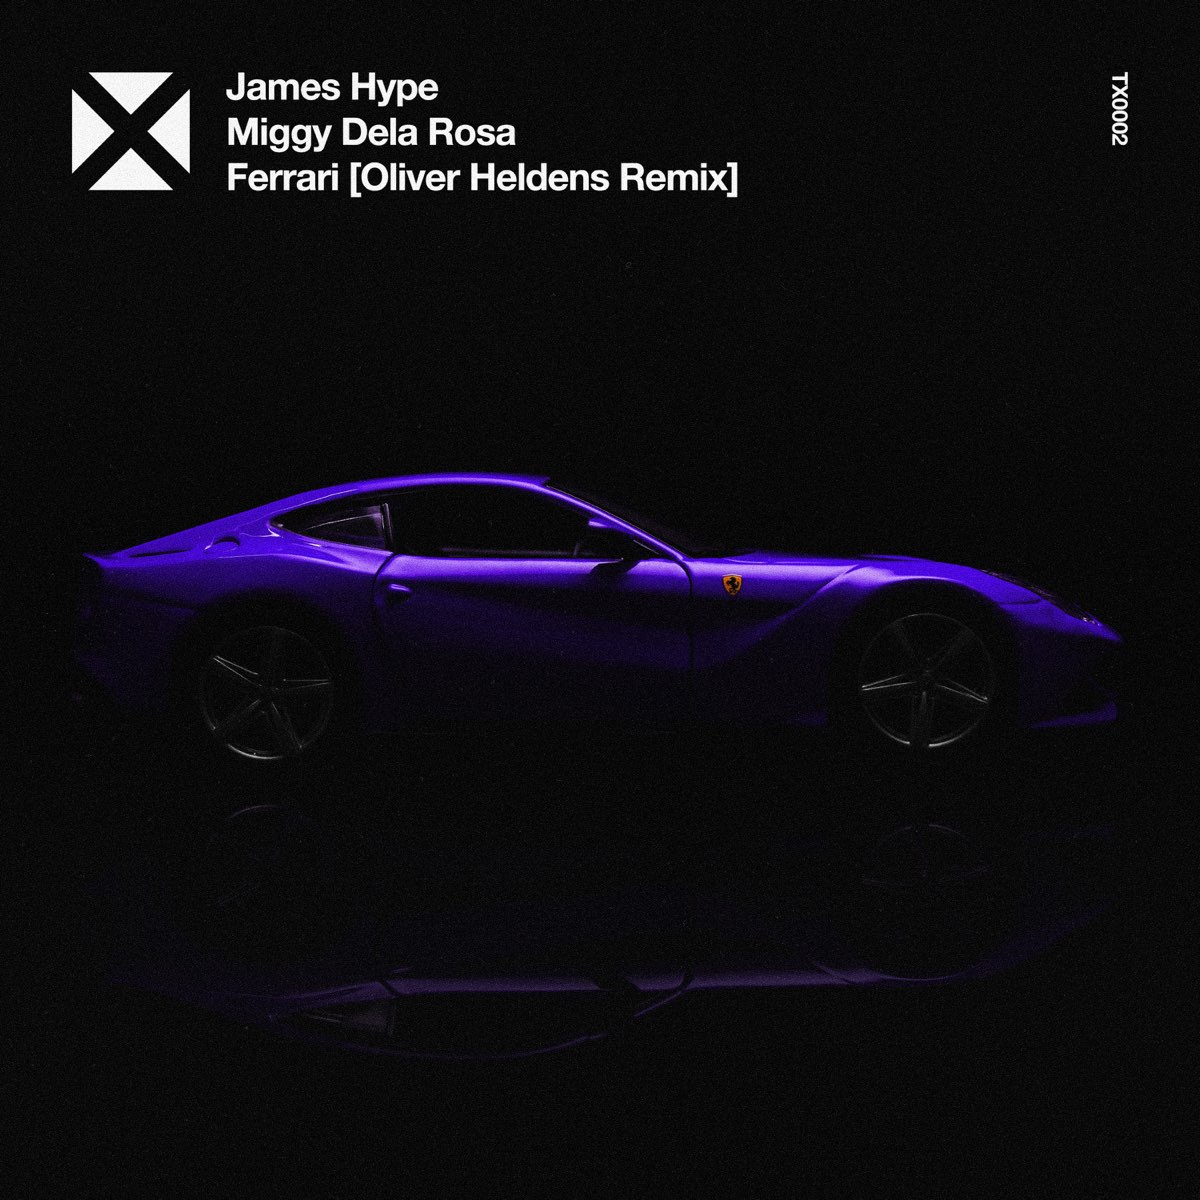 James Hype Ferrari Heldens Extended Remix. James Hype feat. Miggy dela Rosa - Ferrari. Ferrari James Hype Maggi Delarosa. James Hype, Miggy dela Rosa Ferrari (DJ Dark & mentol Remix). Ferrari james